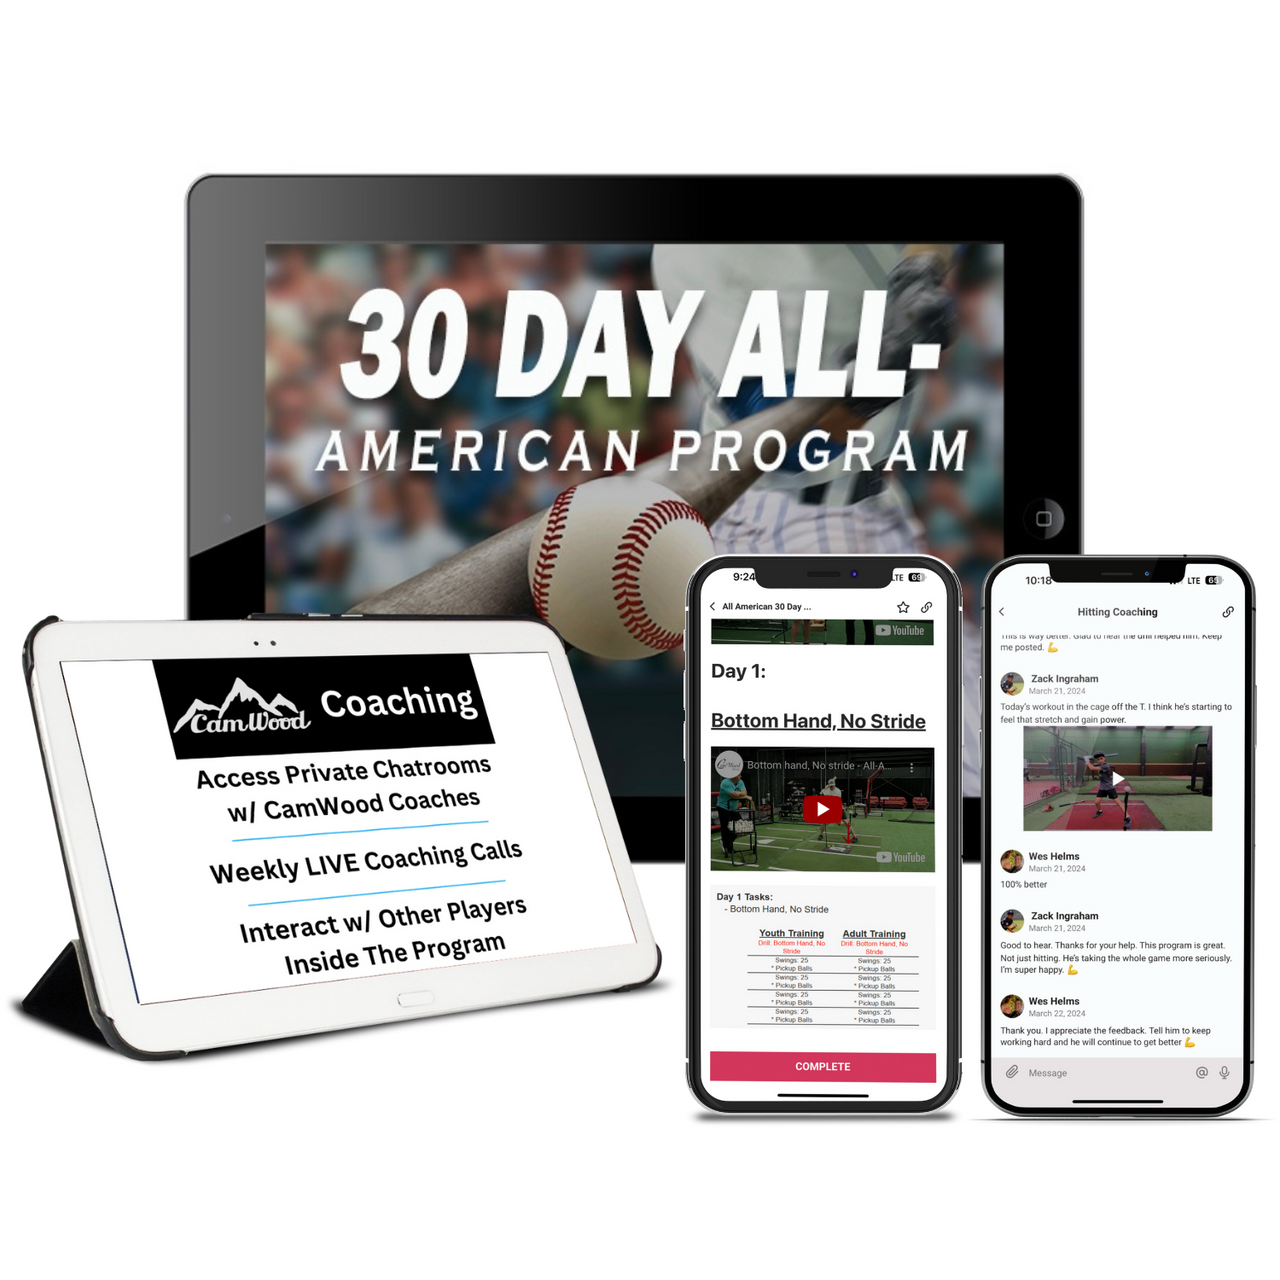 All-American 30 Day Program